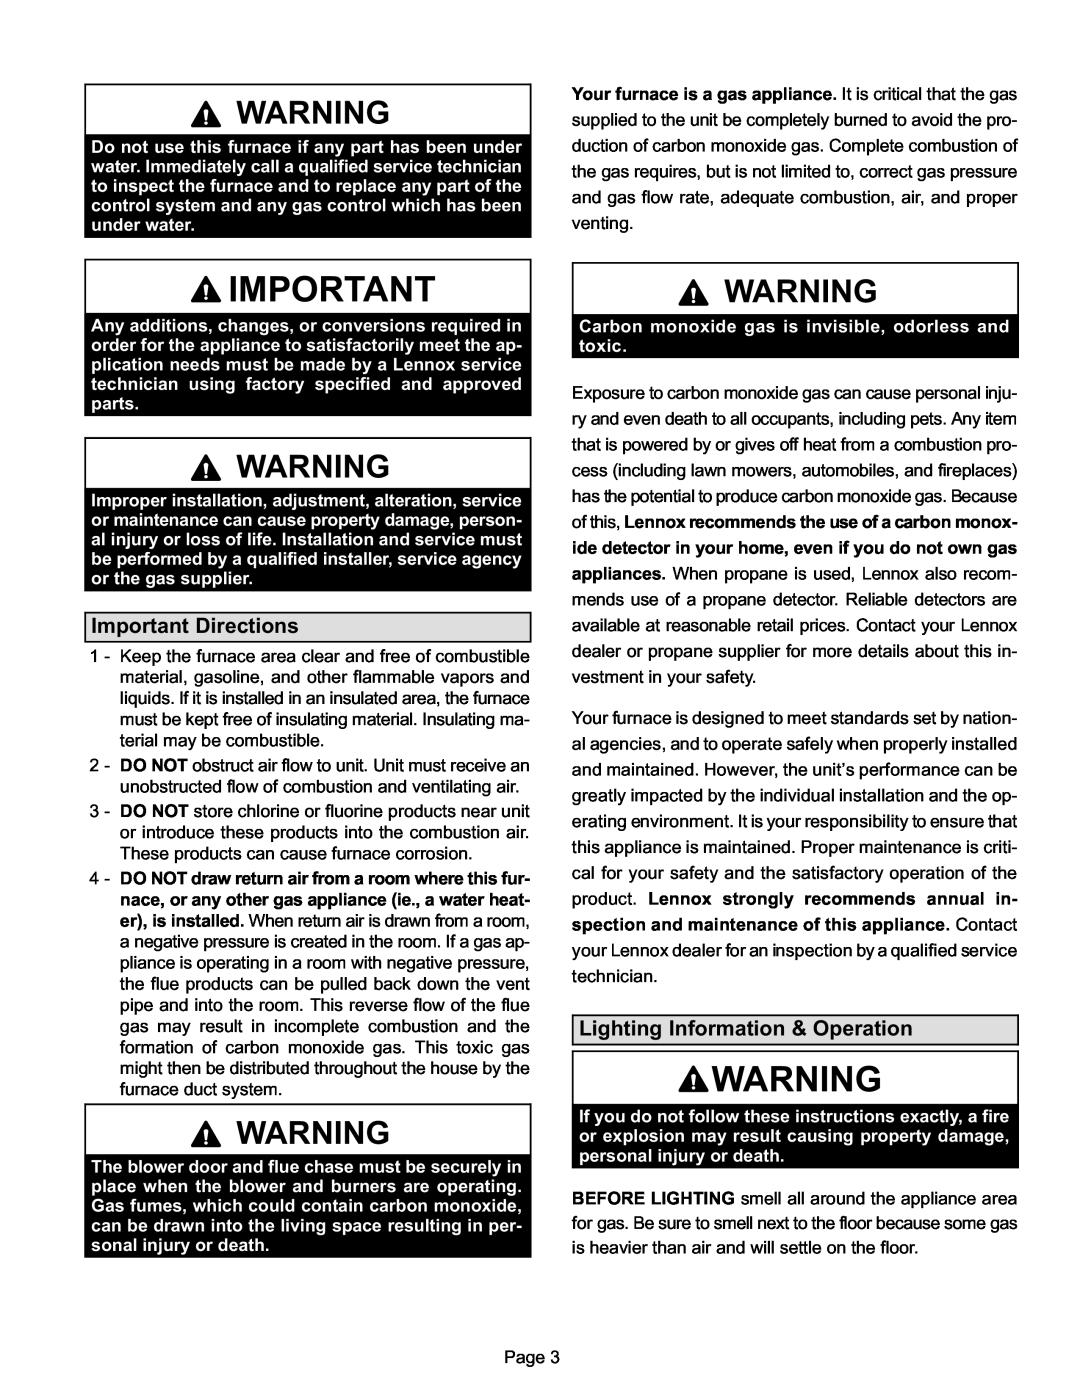 Lennox International Inc G40DF(X) SERIES manual Important Directions, Lighting Information & Operation 